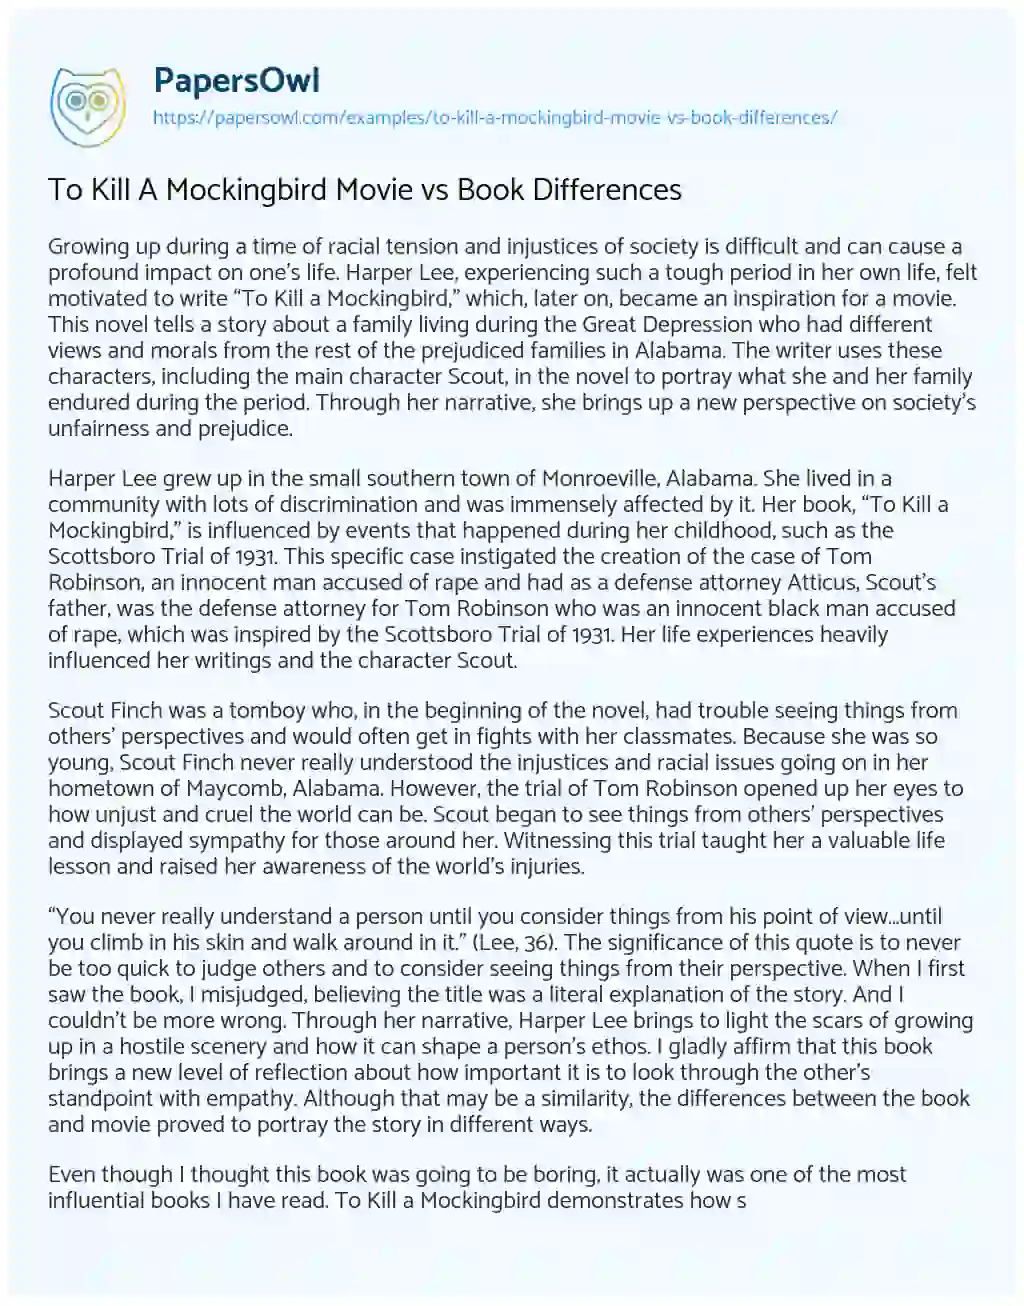 To Kill a Mockingbird Movie Vs Book Differences essay